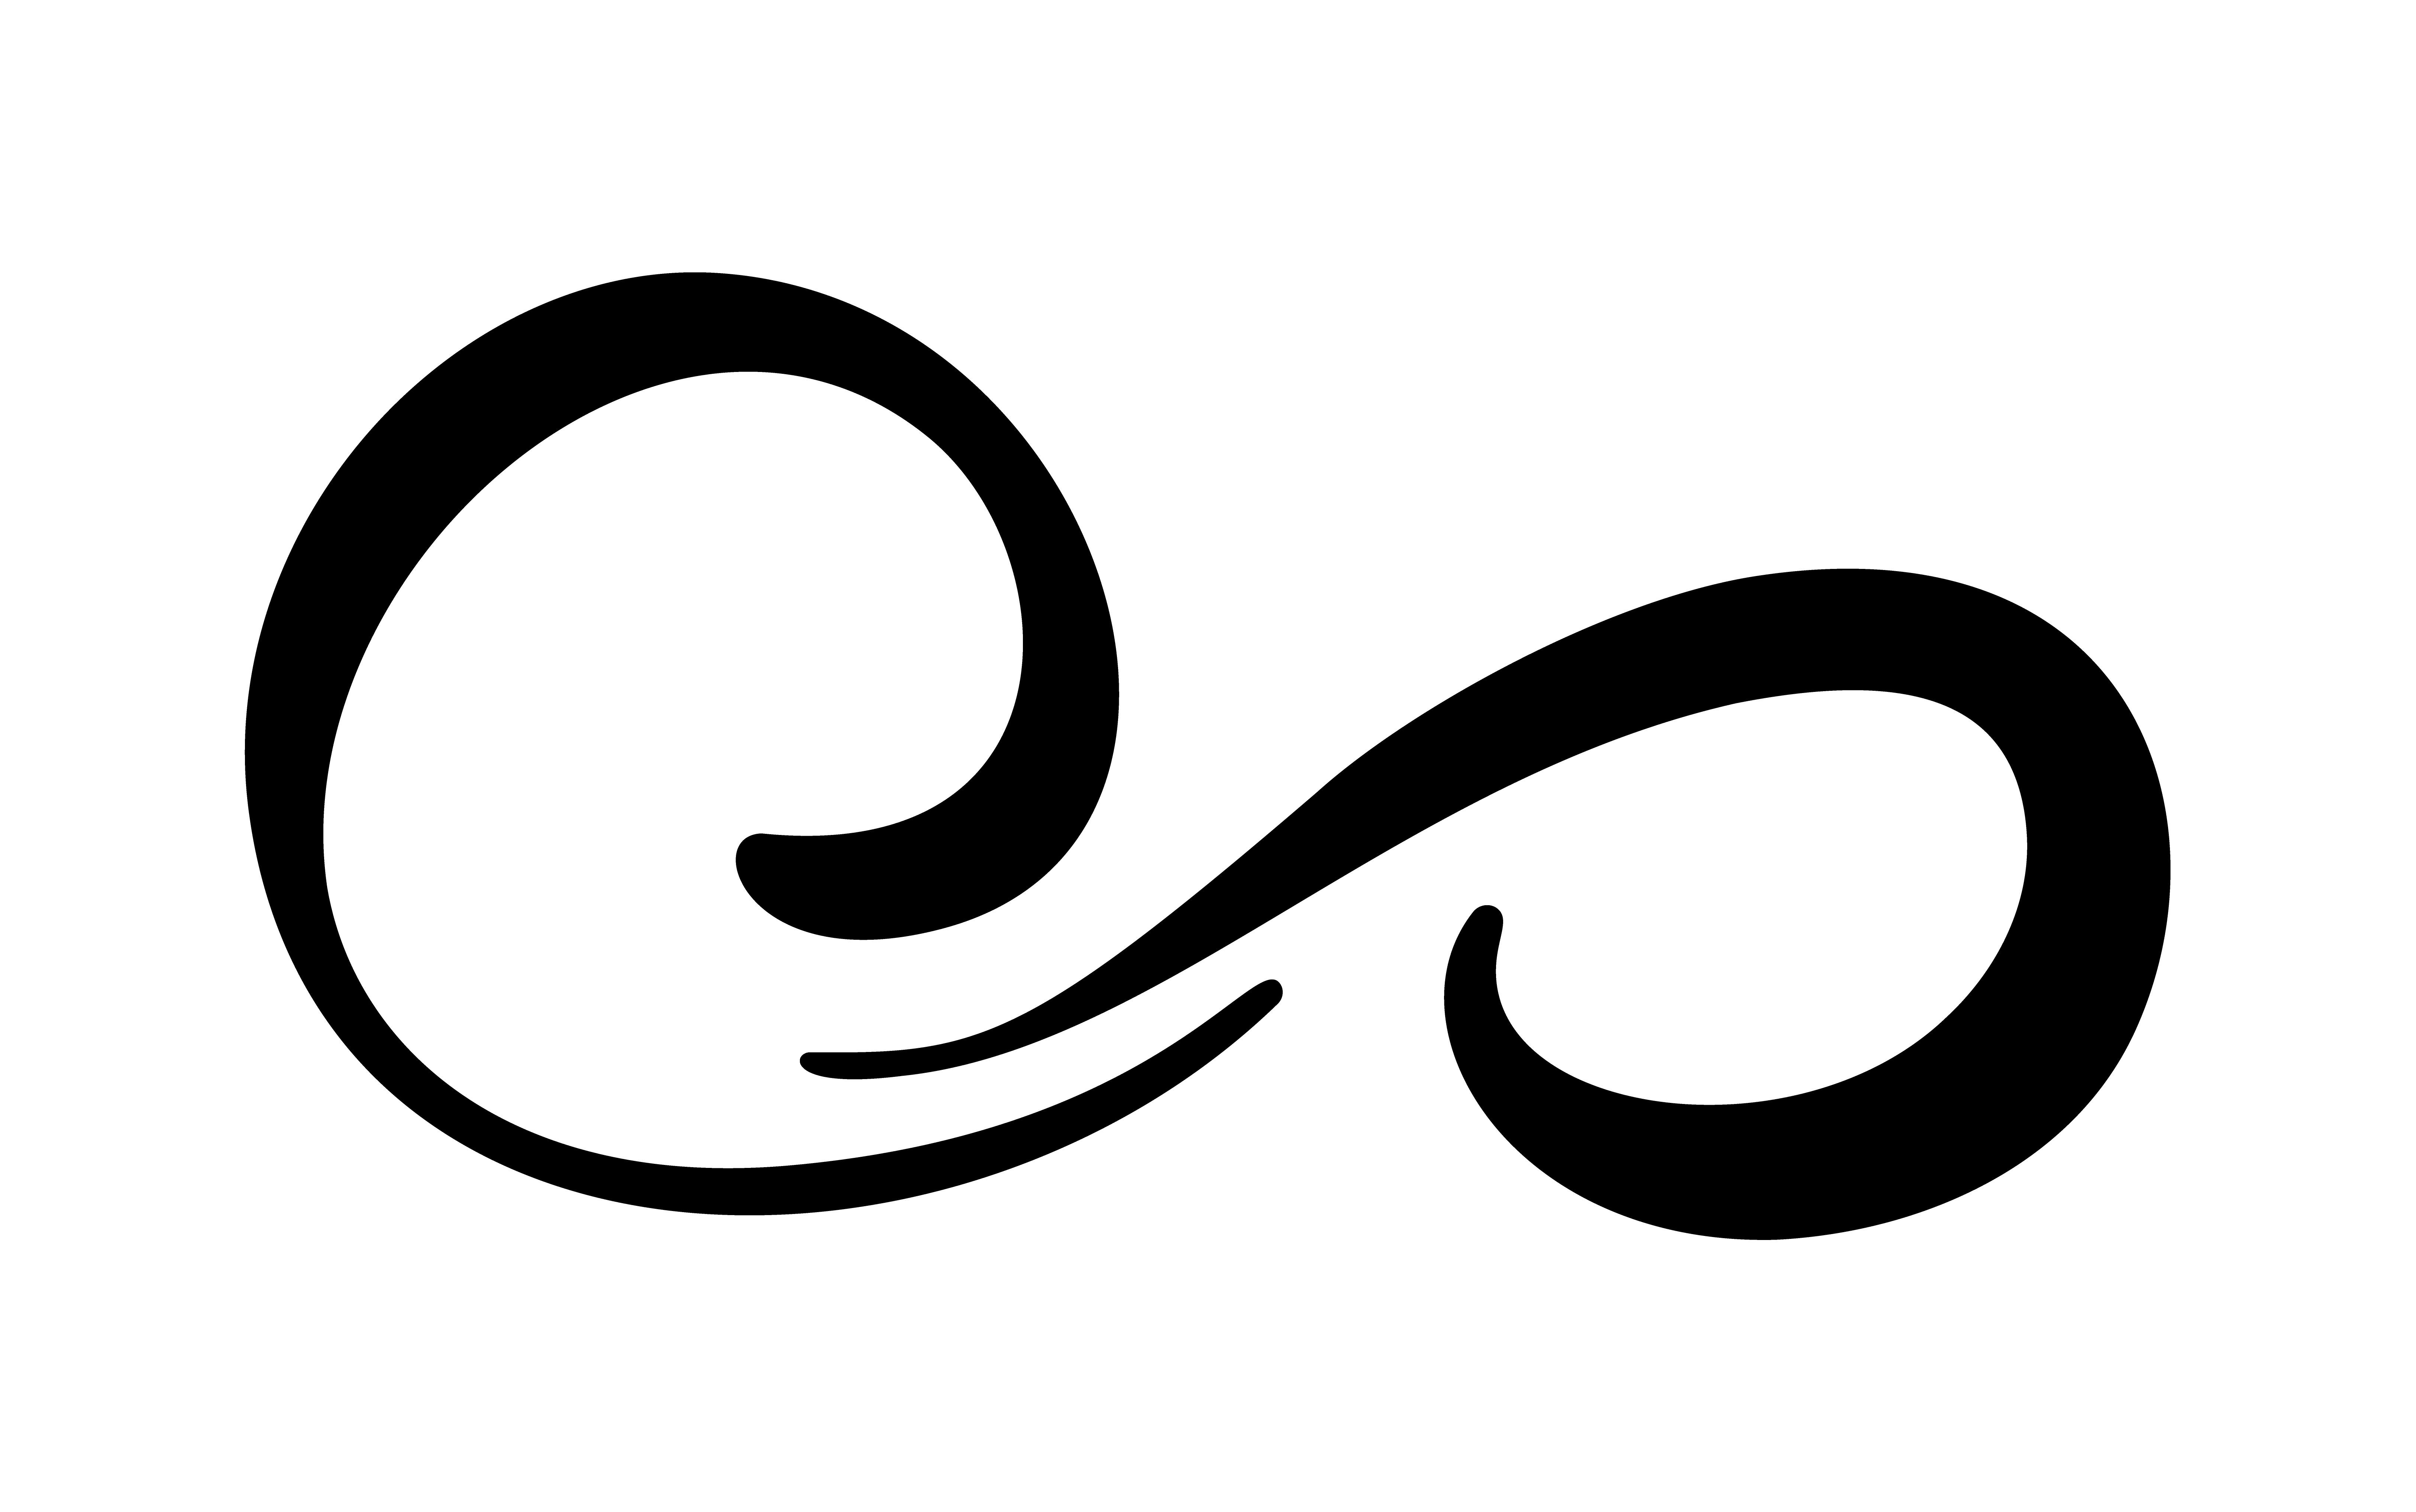 Infinity calligraphy vector illustration symbol. Eternal limitless